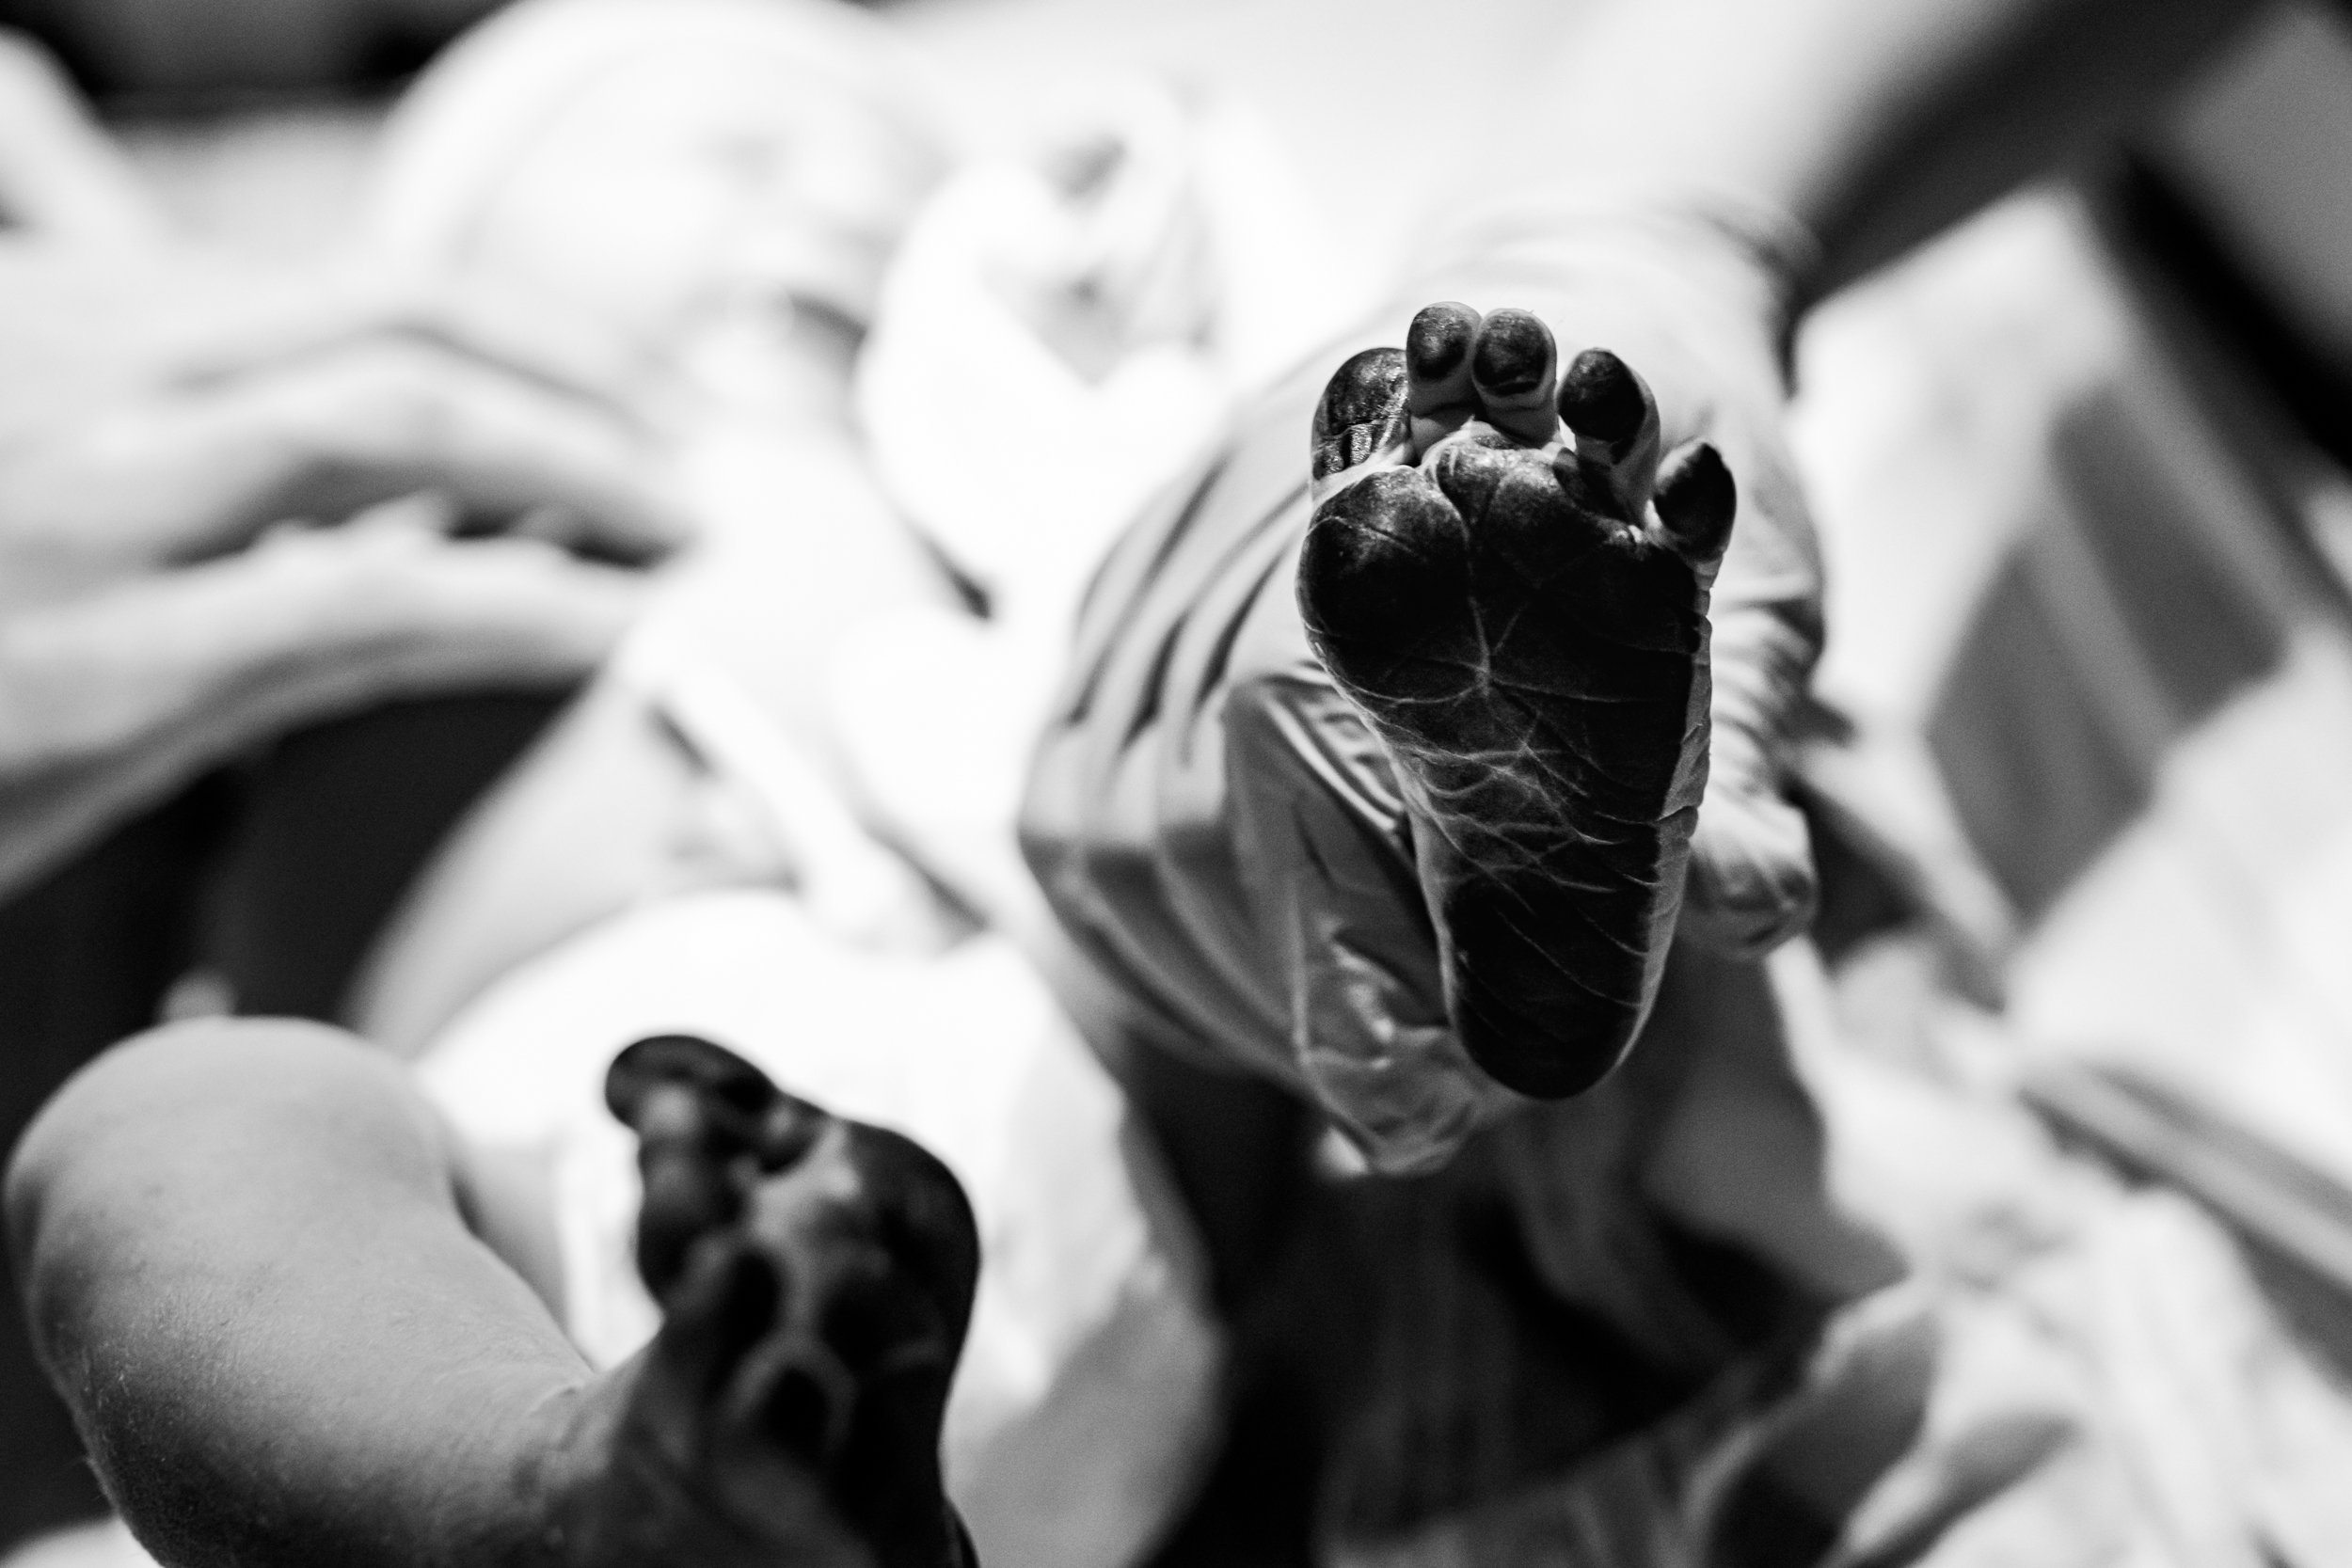 inky newborn baby feet